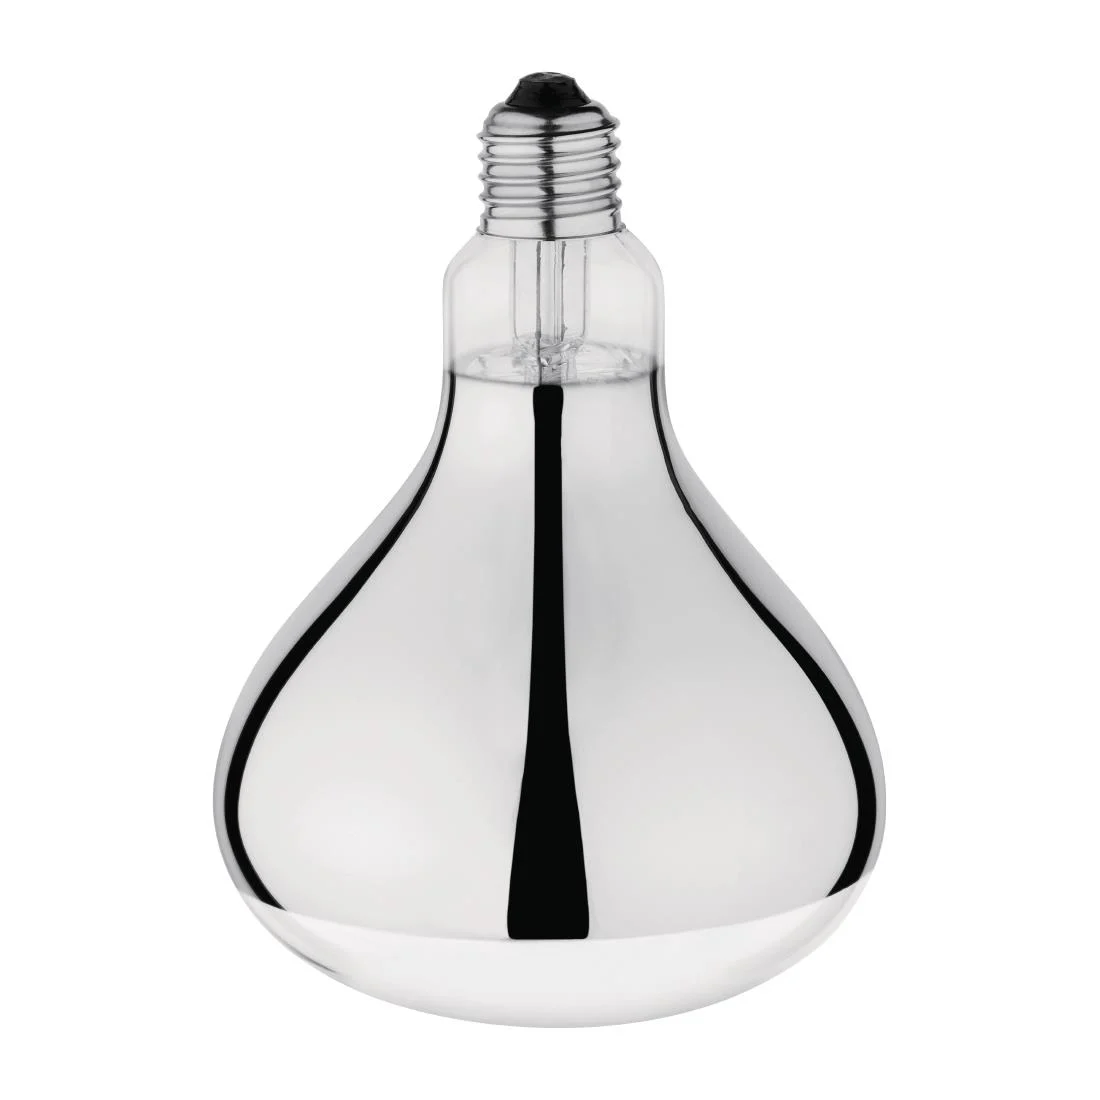 Heat Lamp Bulb for heat lamp shades